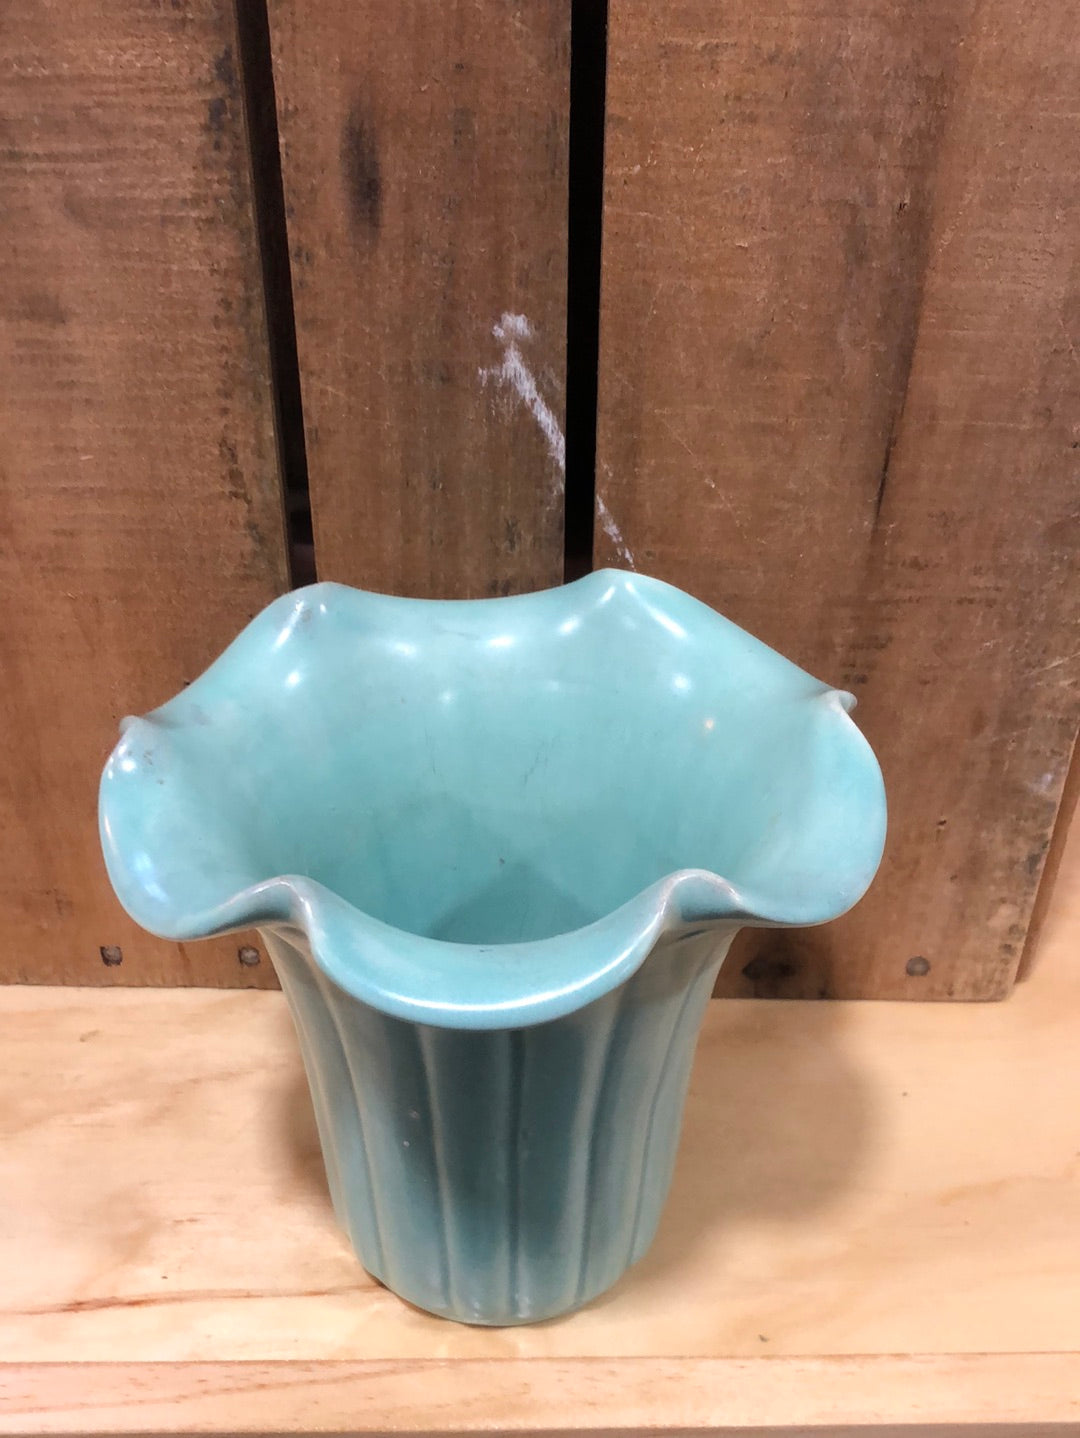 Mid Century Modern Turquoise Ceramic Vase